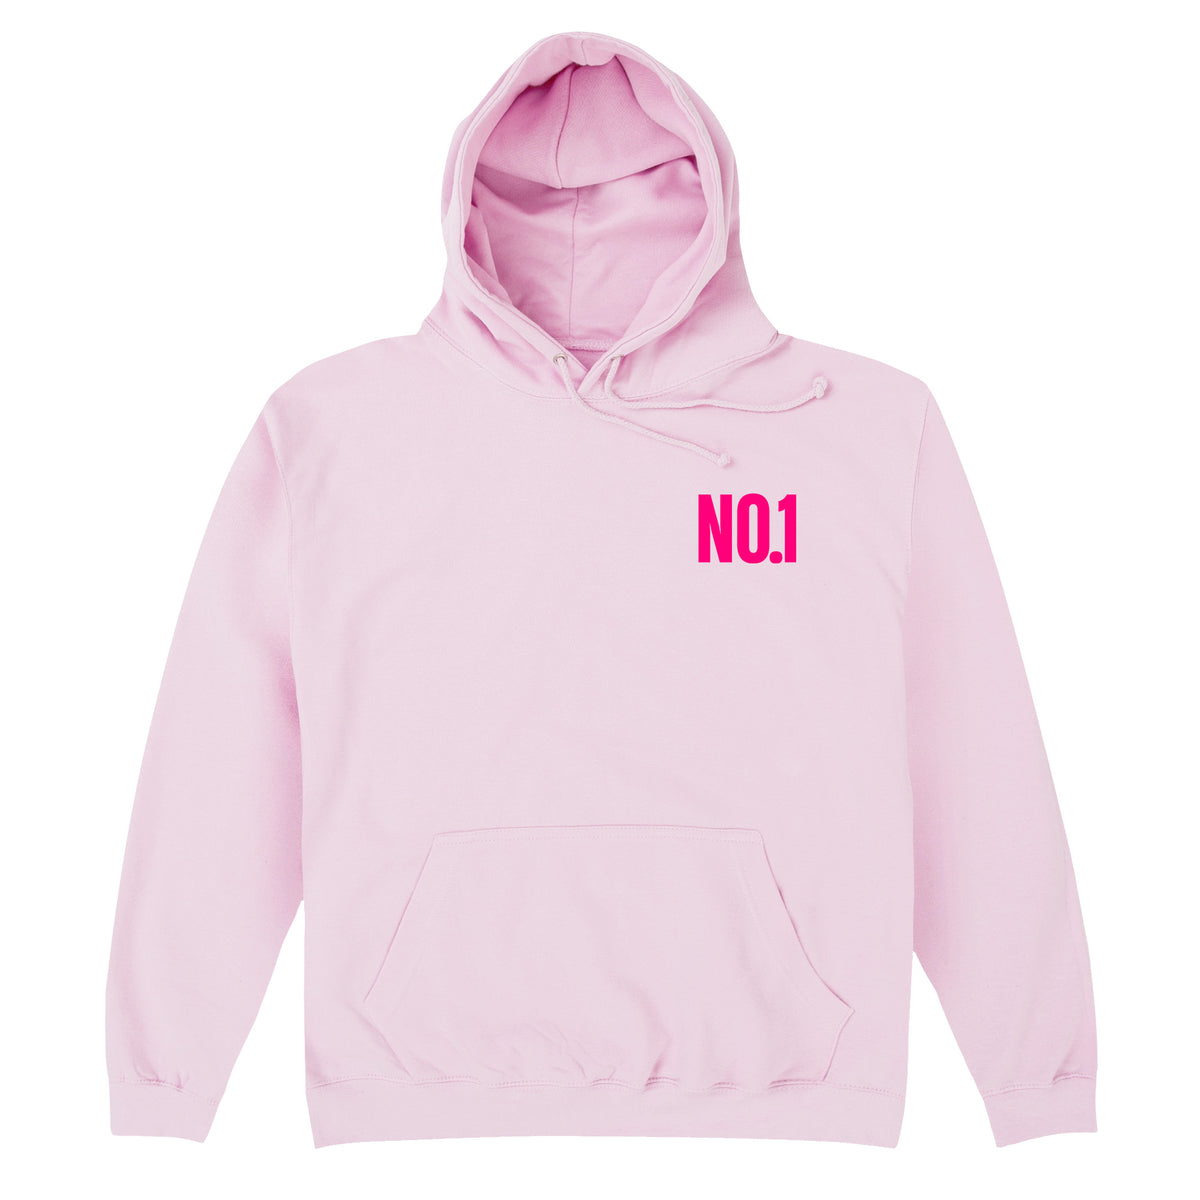 No.1 Pink Hoody